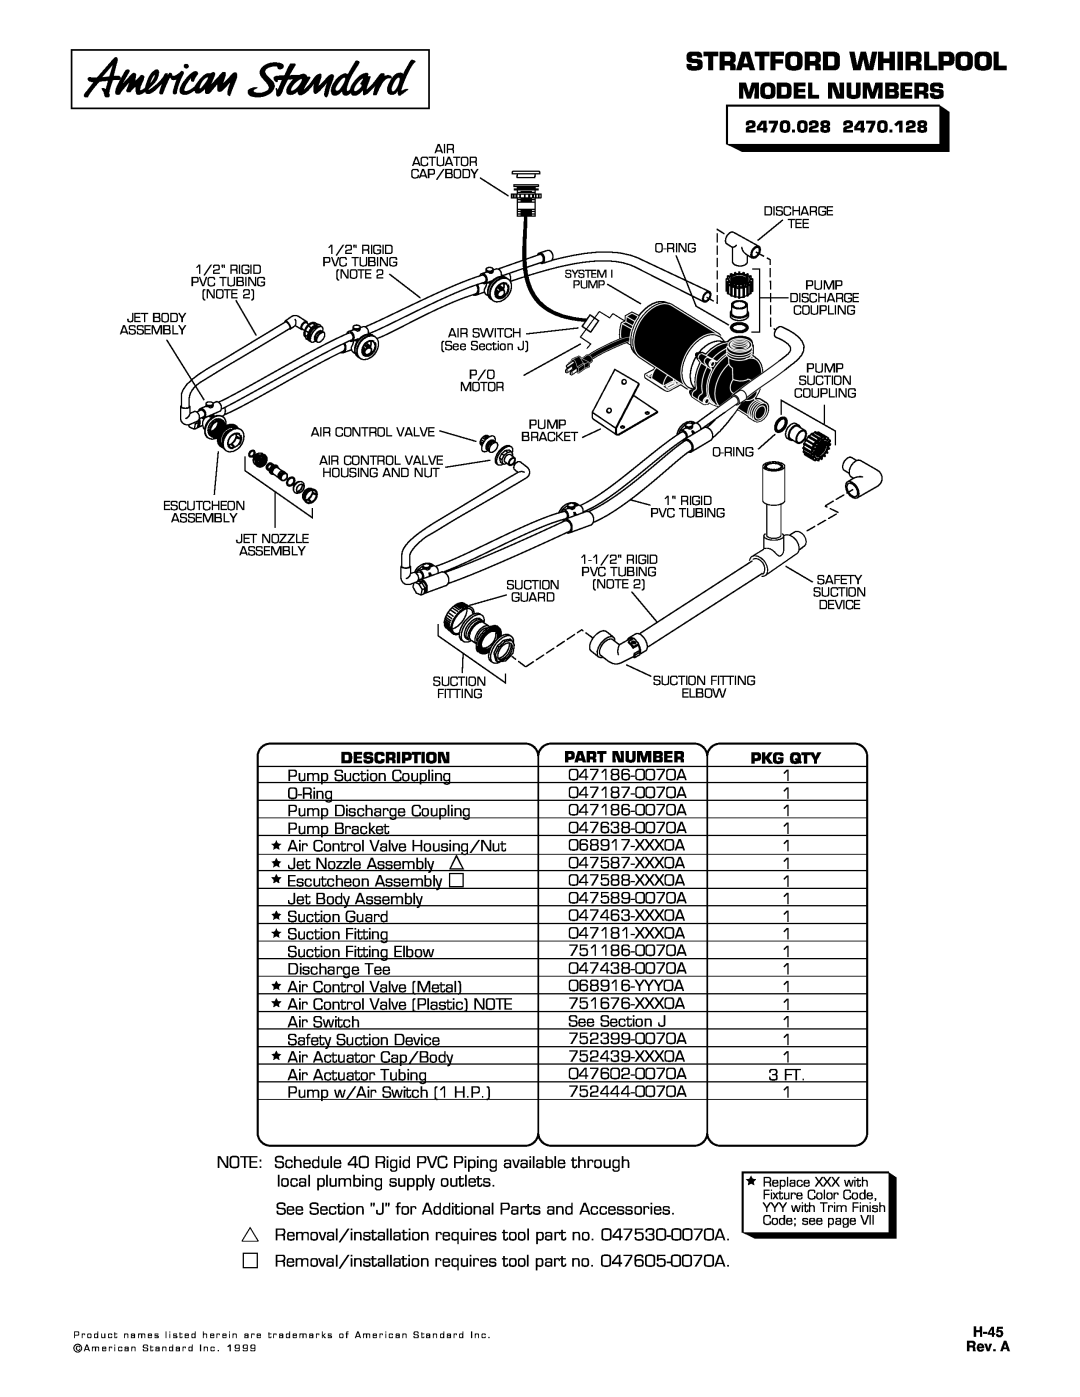 American Standard 2470.128 manual Stratford Whirlpool, Model Numbers, 2470.028, Description, Part Number, Pkg Qty 